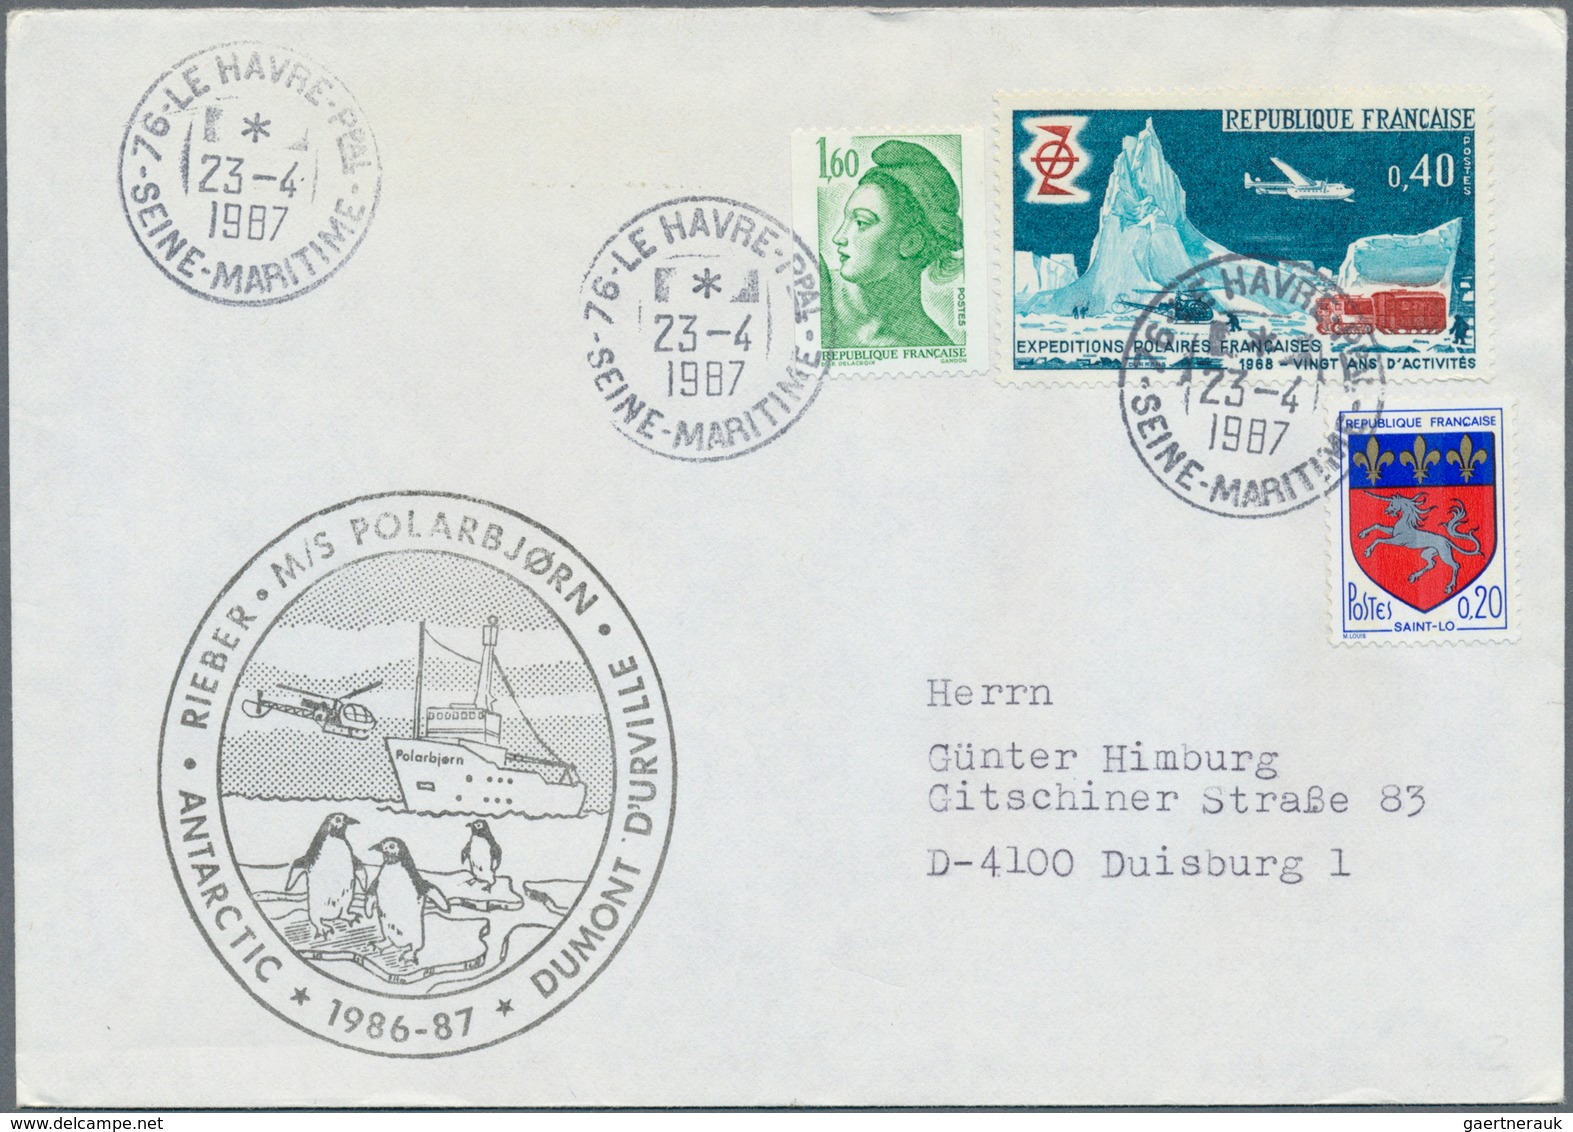 Thematik: Arktis & Antarktis / arctic & antarctic: 1979/1994, ship mail/thematic covers Arctic-/Anta